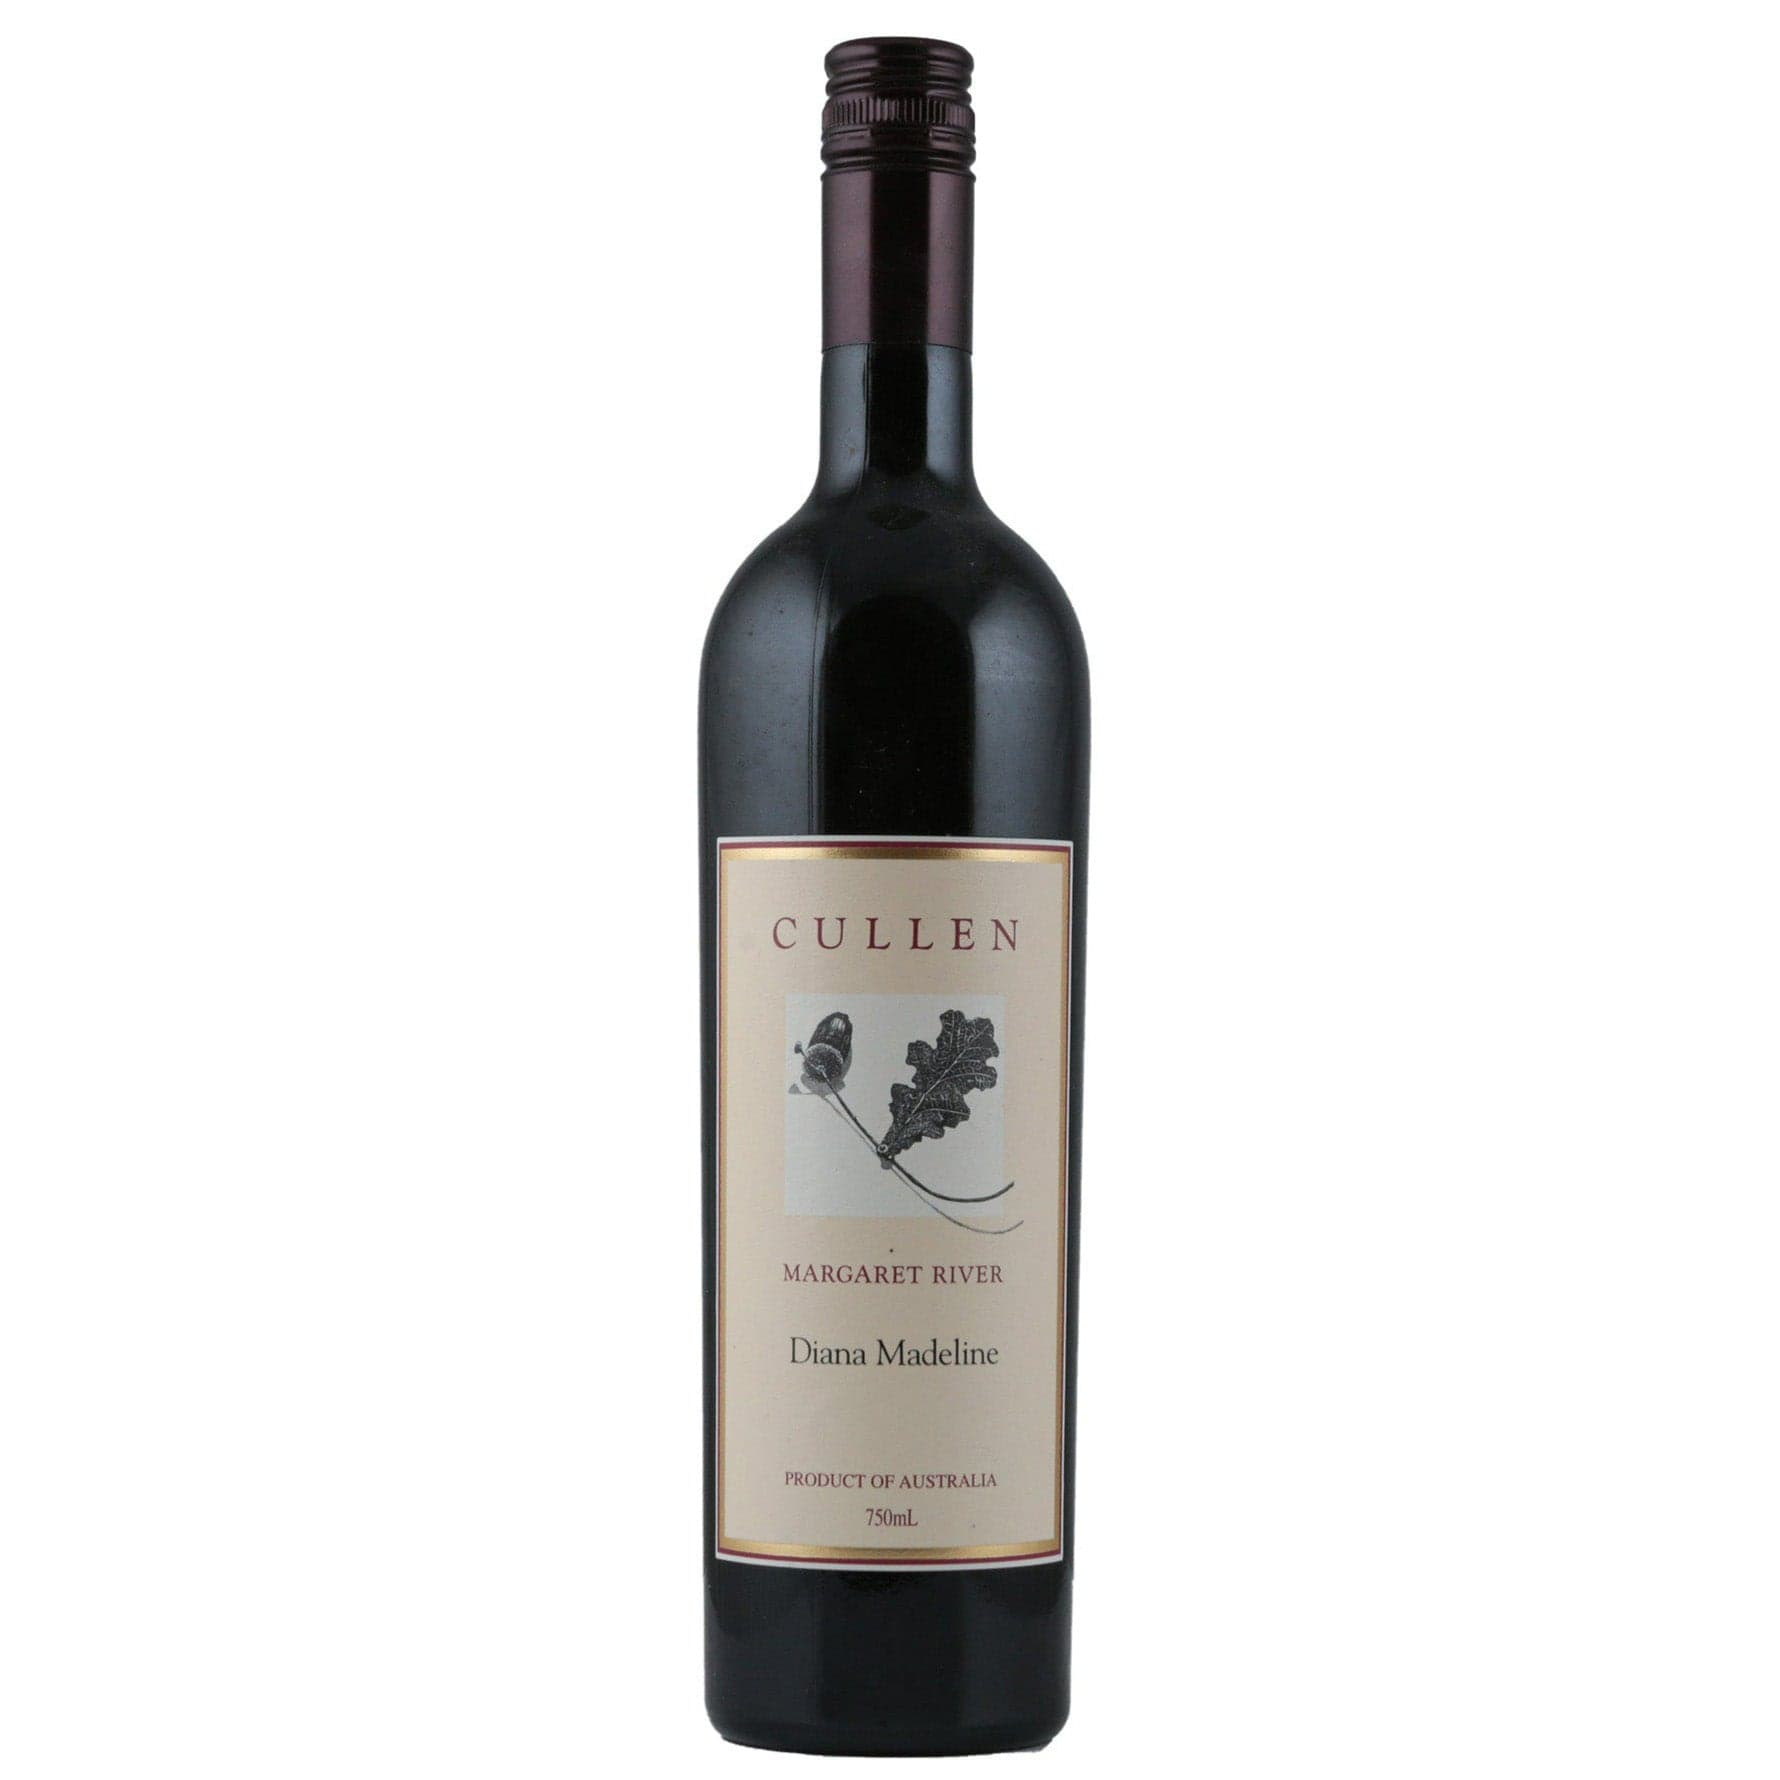 Single bottle of Red wine Cullen Wines, Diana Madeline Cabernet Merlot, Margaret River W.A., 2015 87% Cabernet Sauvignon, 11% Merlot, 1% Cabernet Franc & 1% Malbec